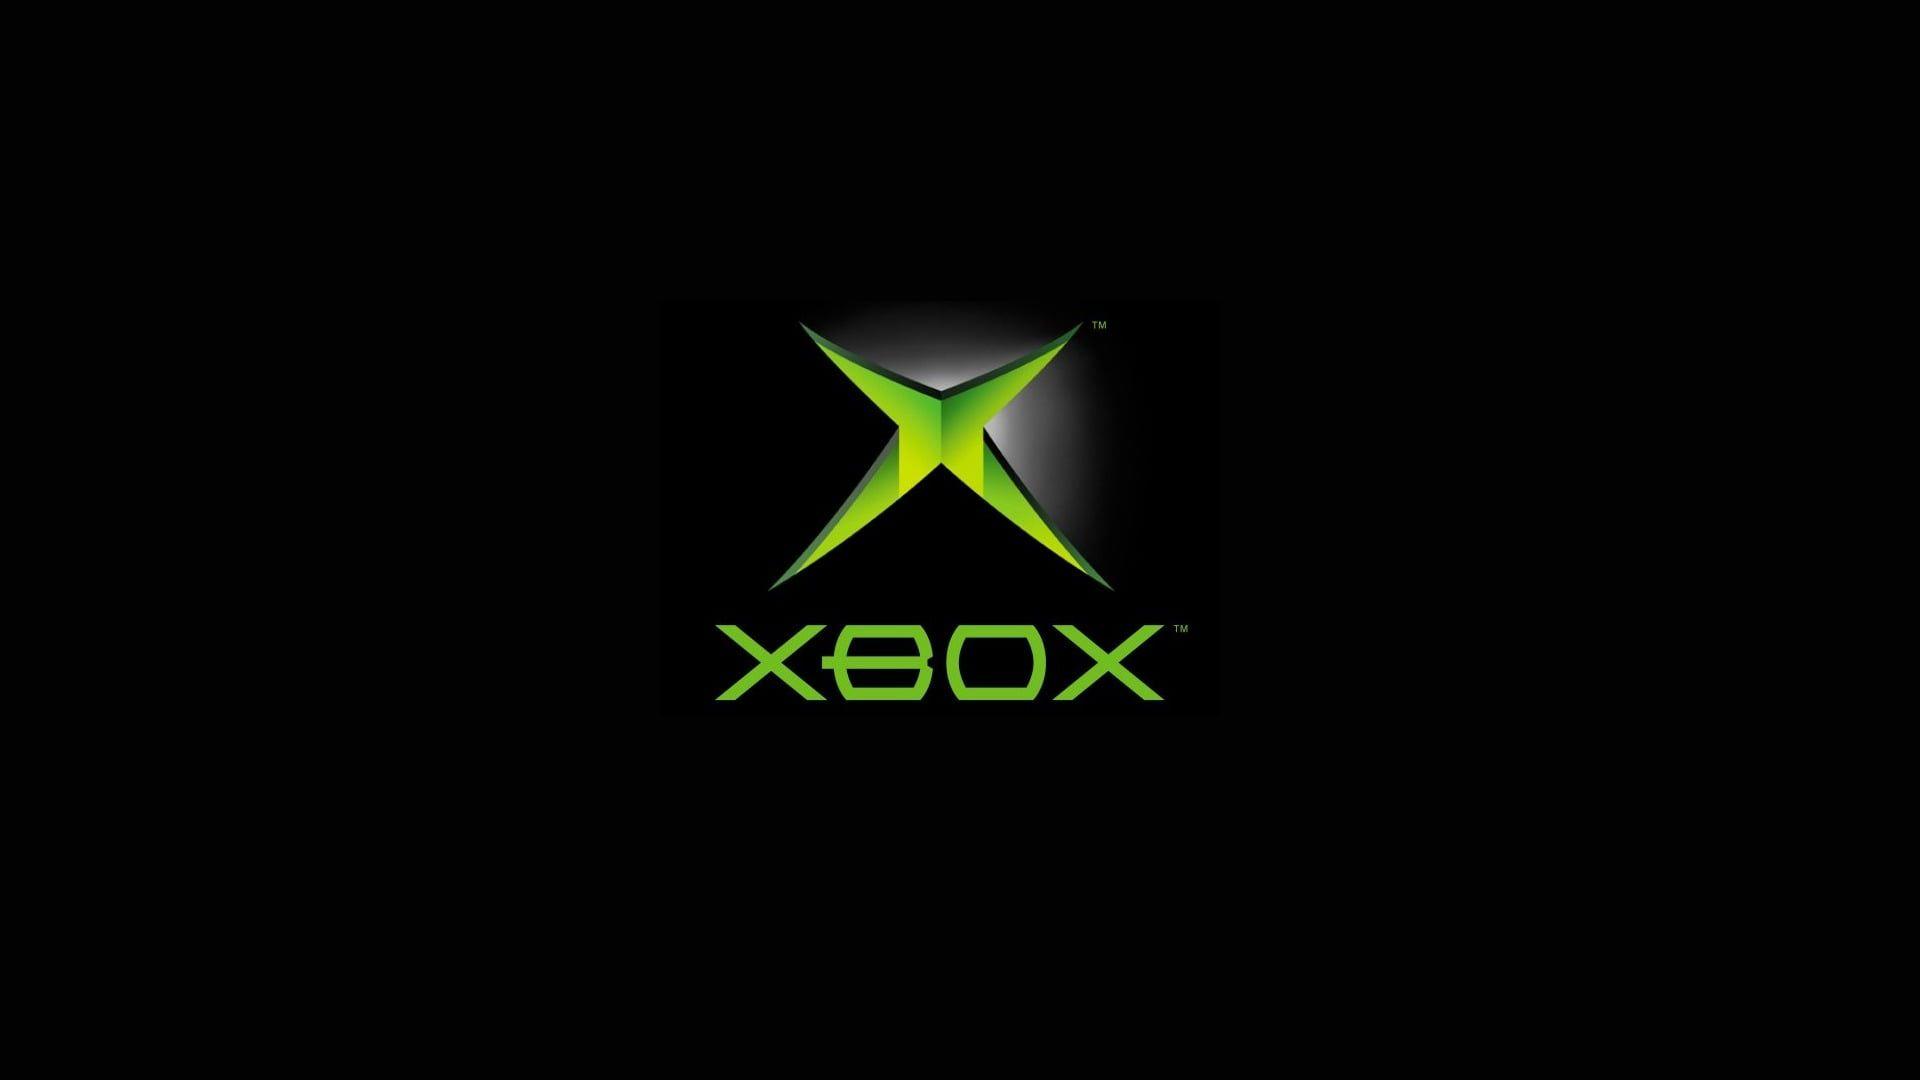 Xbox 360 Black Wallpaper 2376